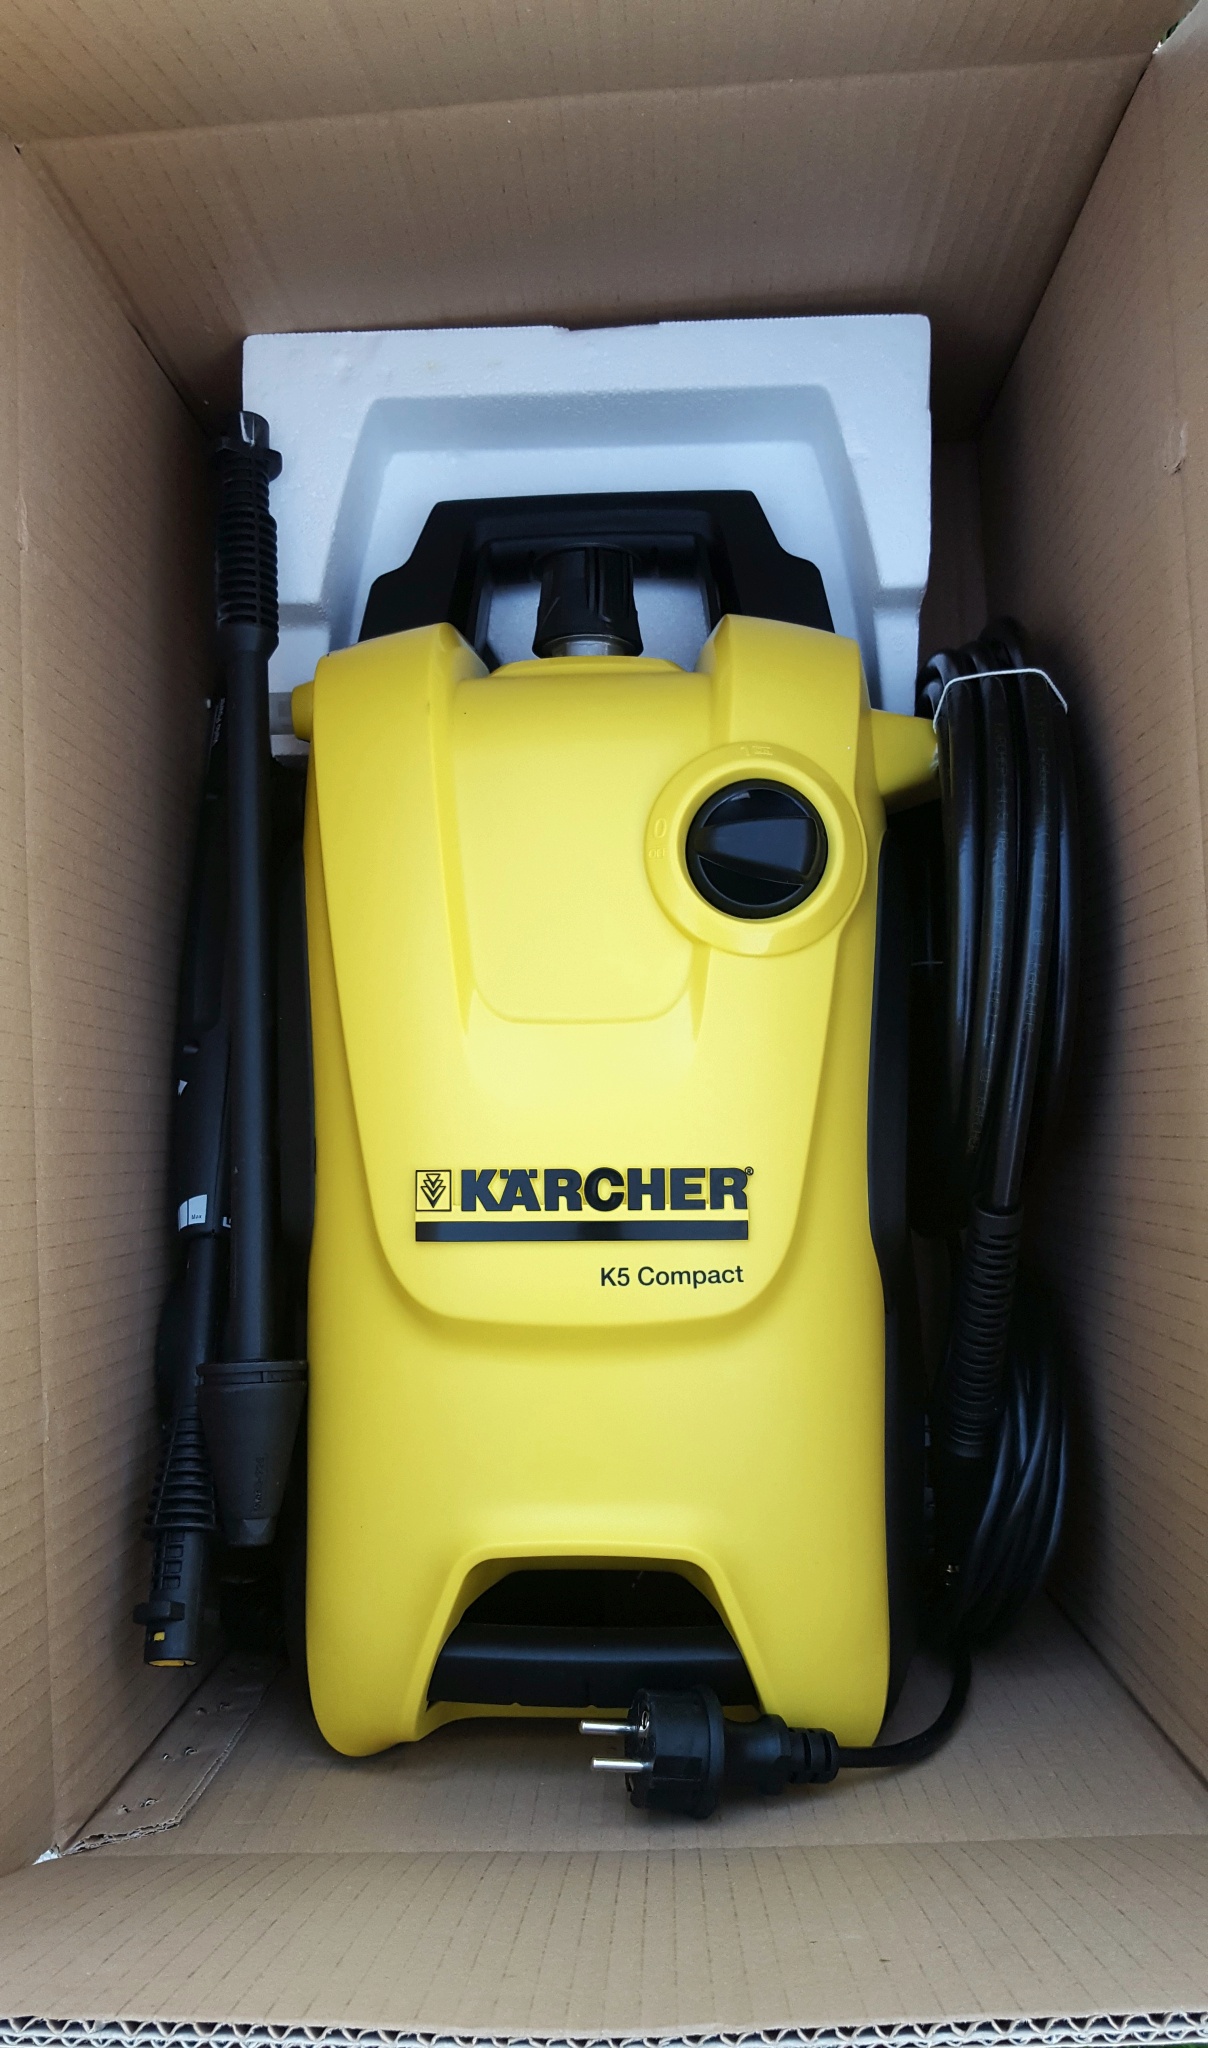 Мойка 5 компакт. Мойка Karcher k 5 Compact. Минимойка Karcher к5 Compact. Мойка высокого давления Karcher к 5. 1.630-720.0 Karcher k 5 Compact.